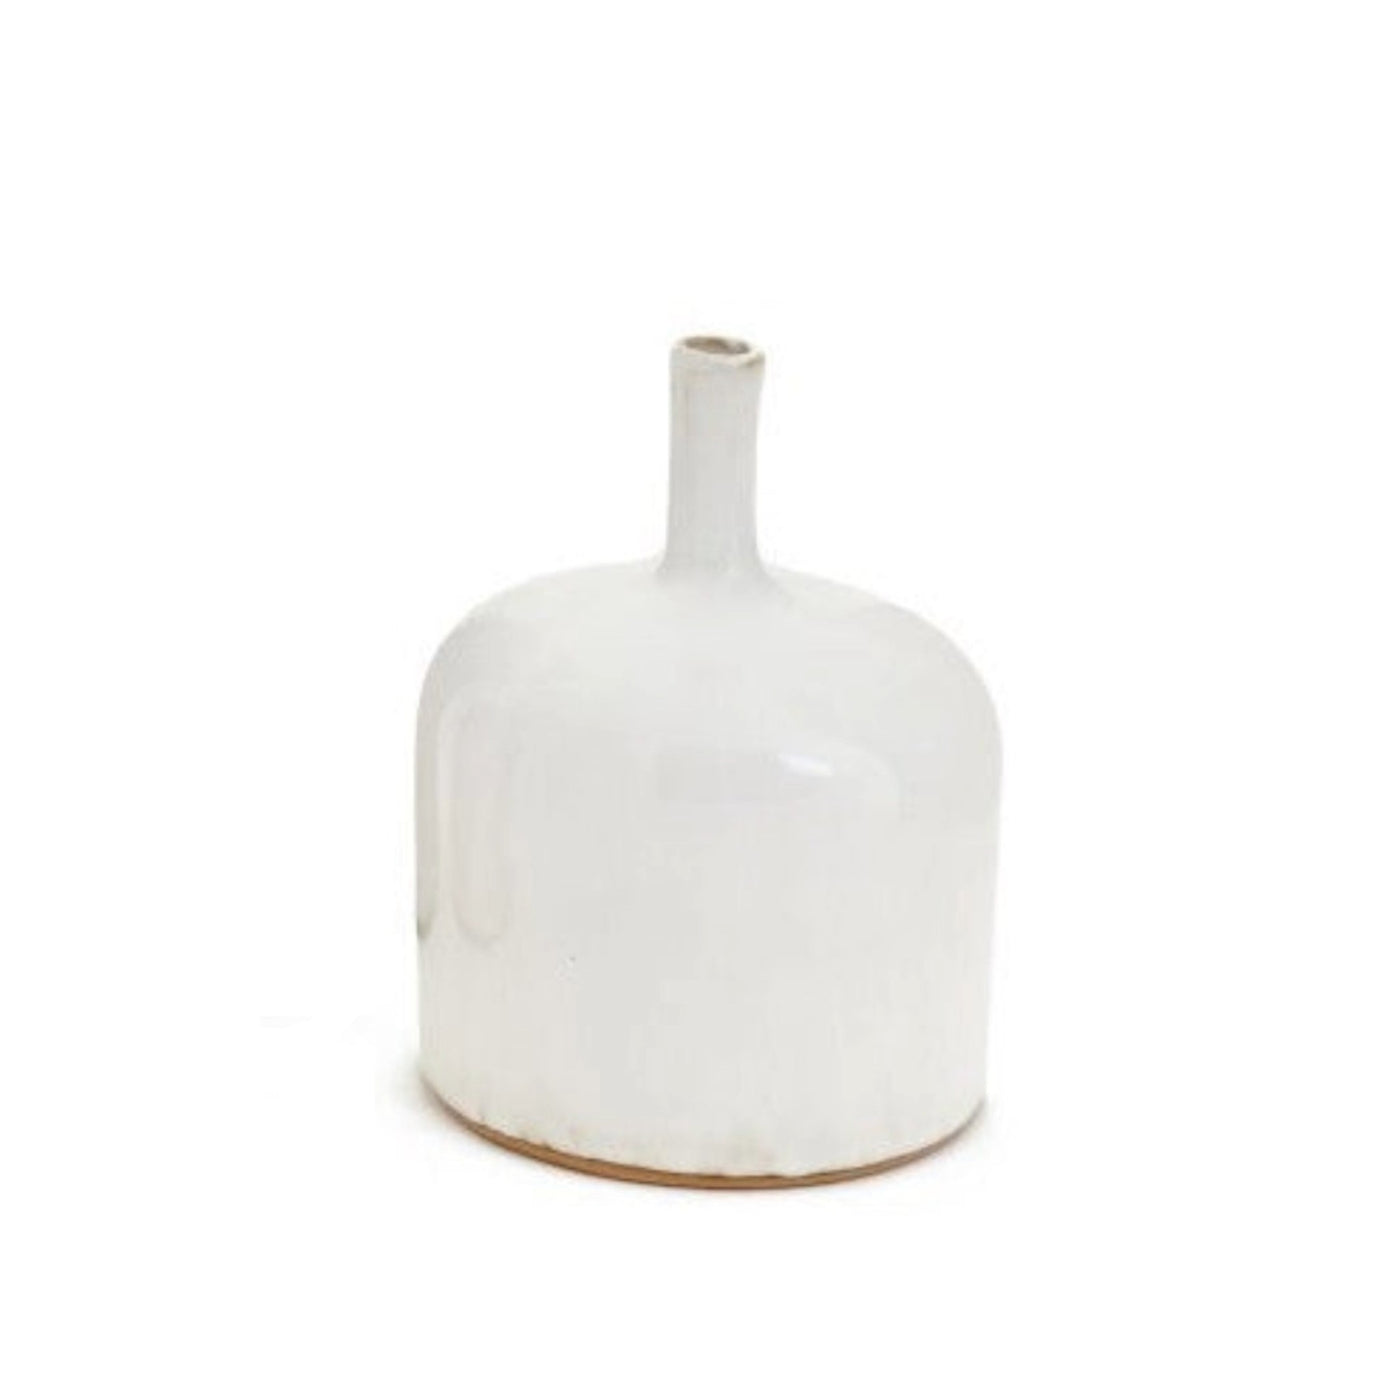 Stoneware vases: off-White ceramic vase with thin bottleneck. Small #8360055